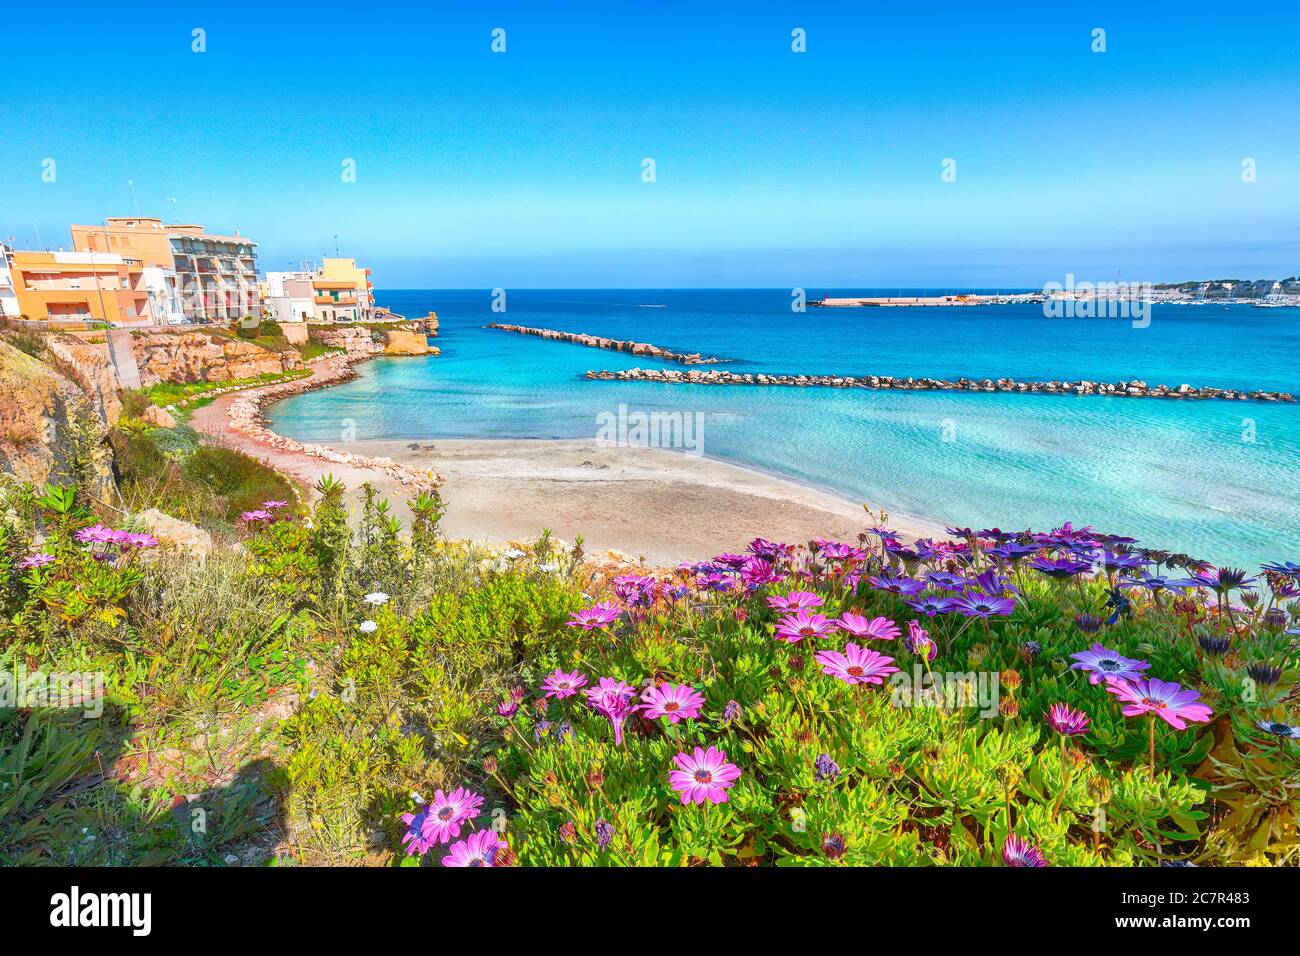 Otranto - Küstenstadt in Apulien mit türkisfarbenem Meer. Urlaub in Italien. Stadt Otranto, Provinz Lecce auf der Halbinsel Salento, Apulien, Italien Stockfoto